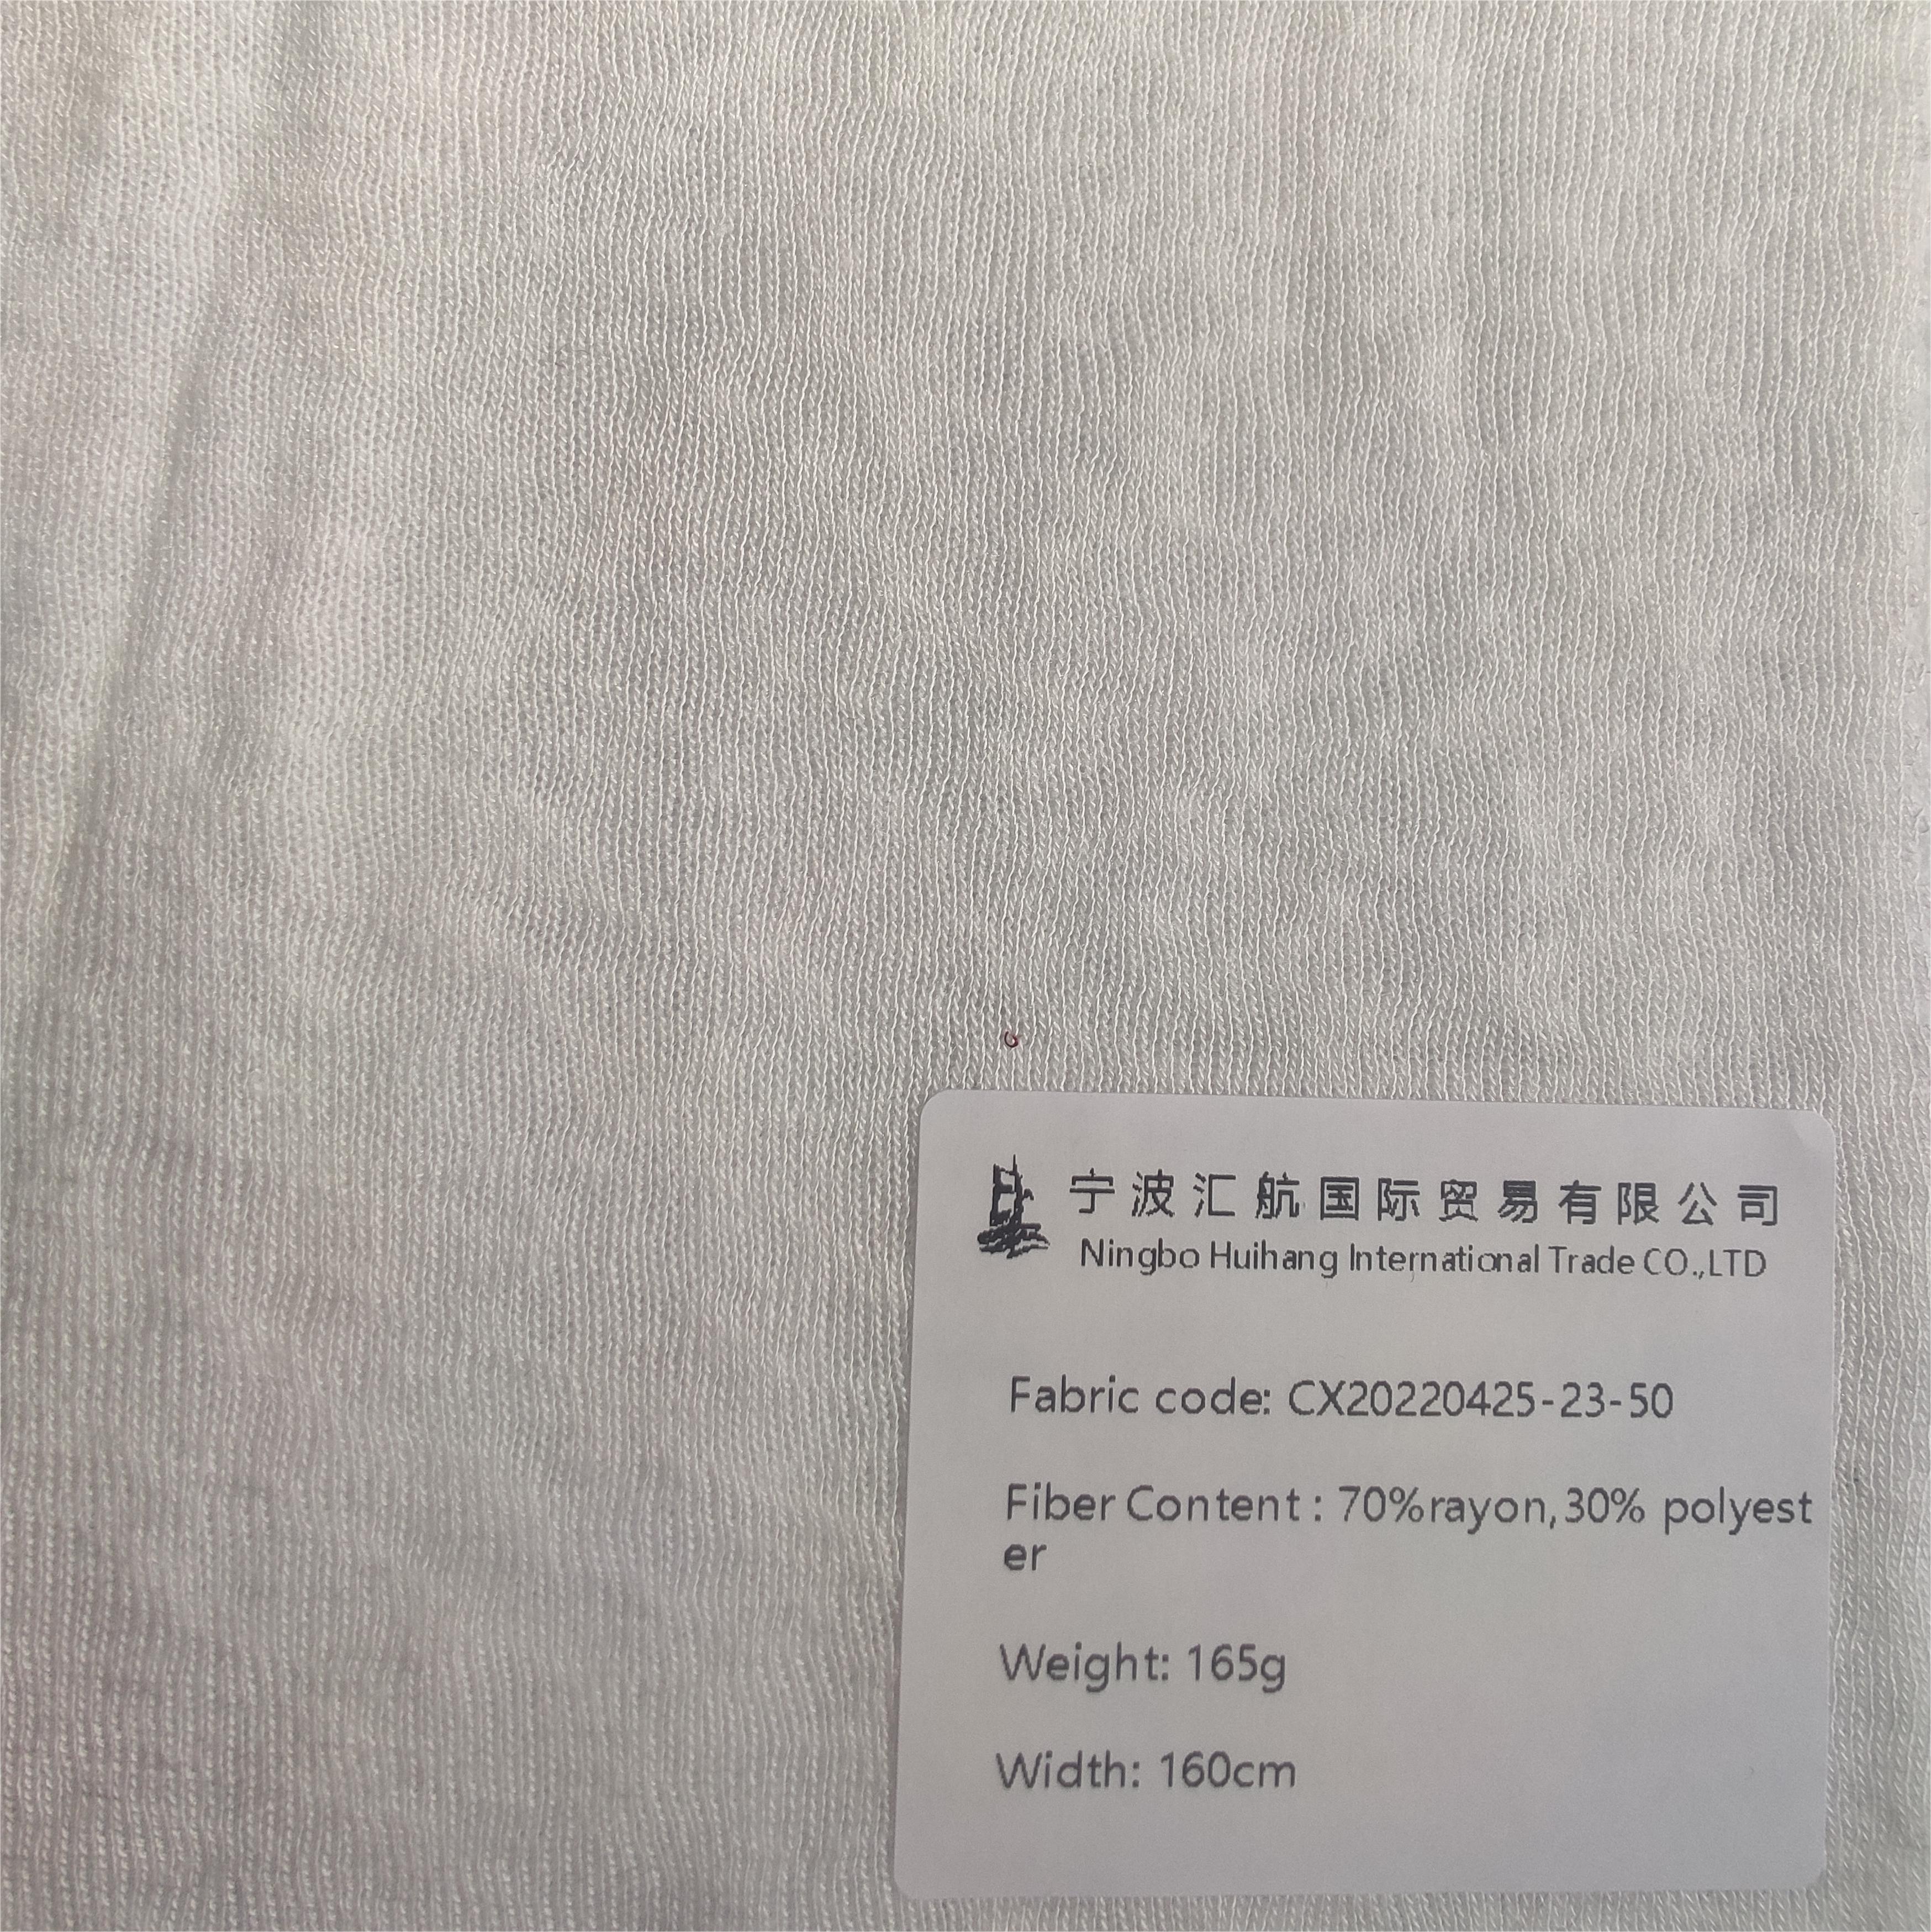 CX20220425-23-50 : 165G, 70% rayon ,30% polyester snow jersey